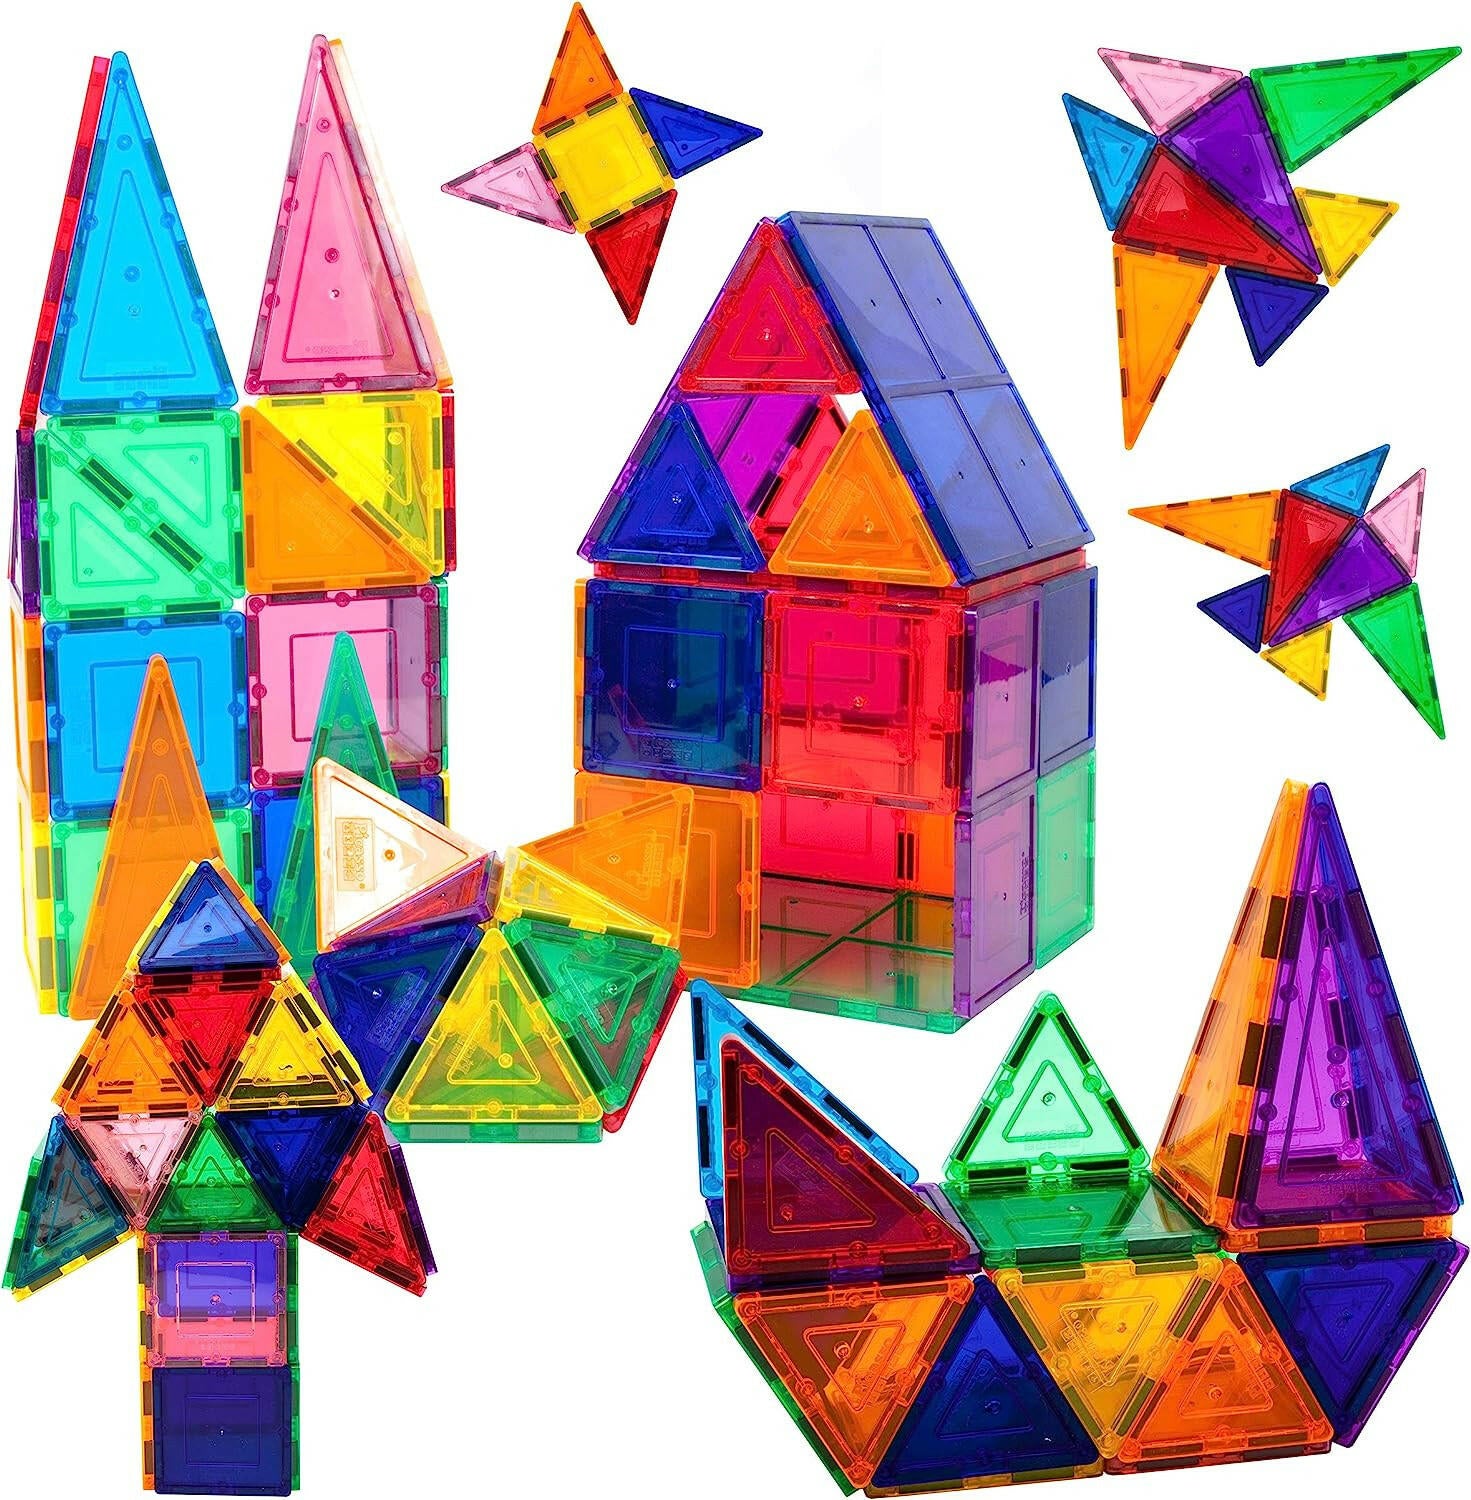 Picasso Tiles 60 Pieces Set Magnet Building Tiles Clear Magnetic 3D Building Blocks Construction Playboards - Creativity beyond Imagination, Inspirational, Recreational, Educational, Conventional.